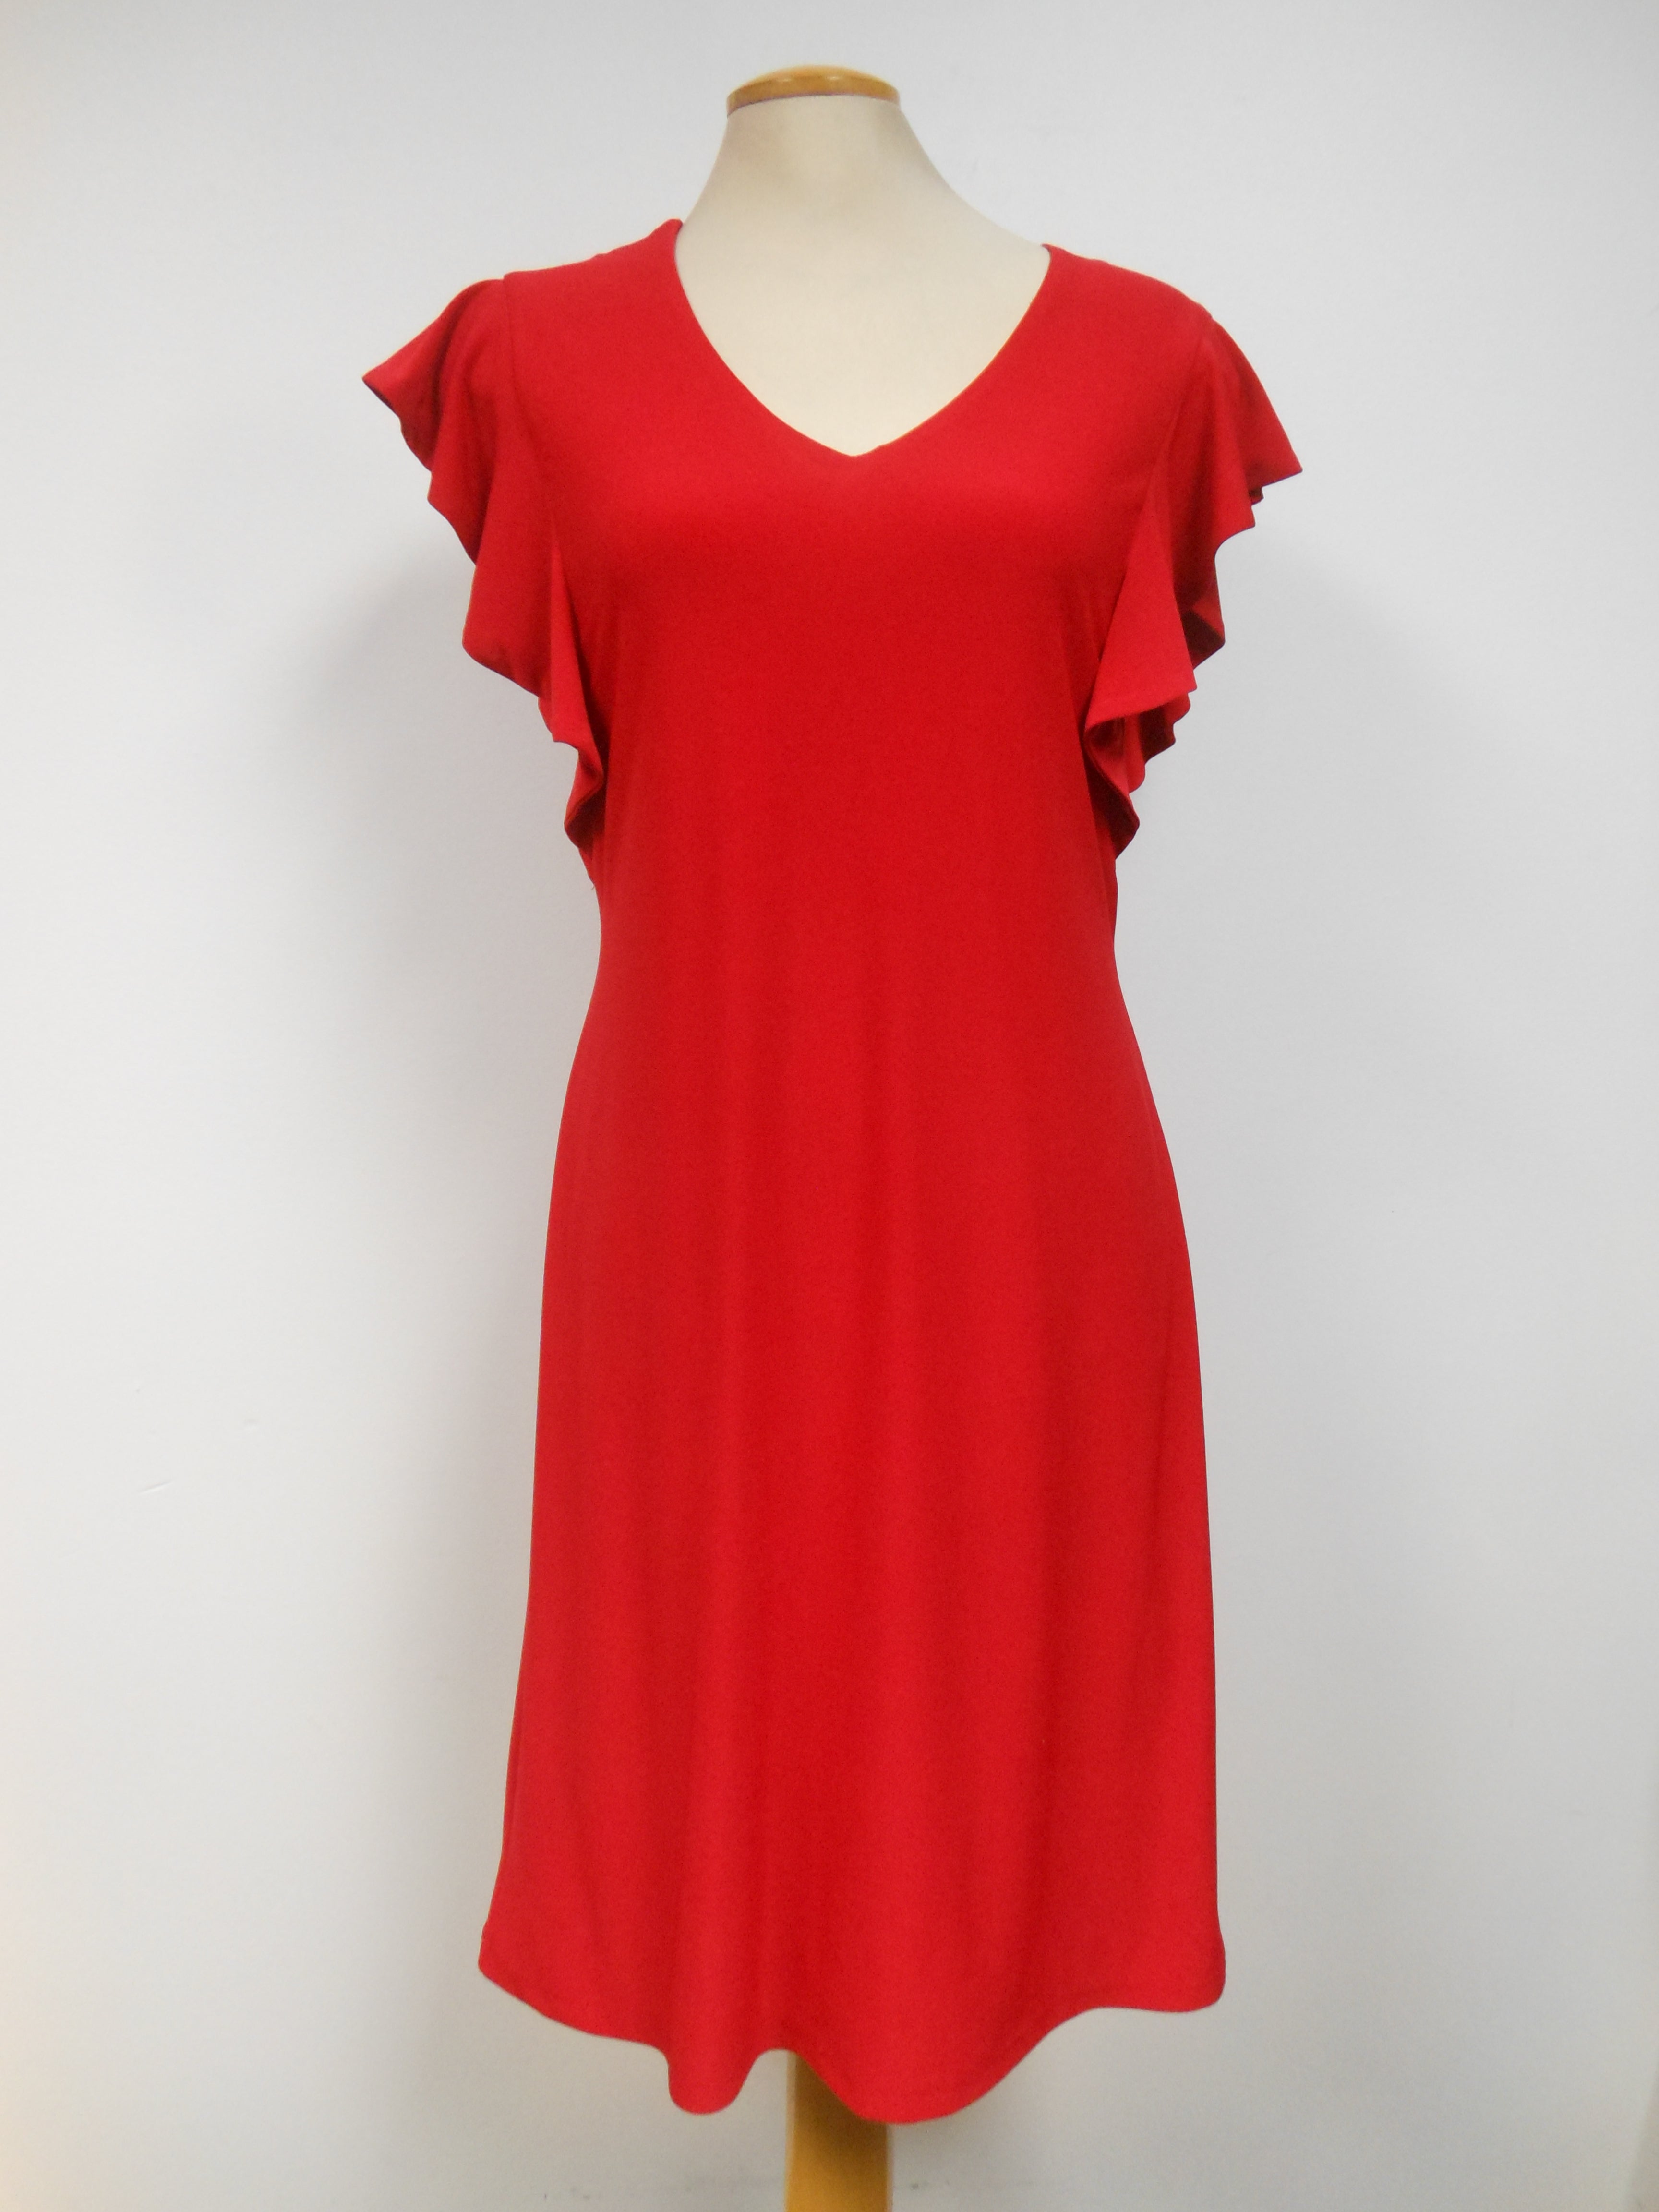 FRANK LYMAN RED DRESS 176037 